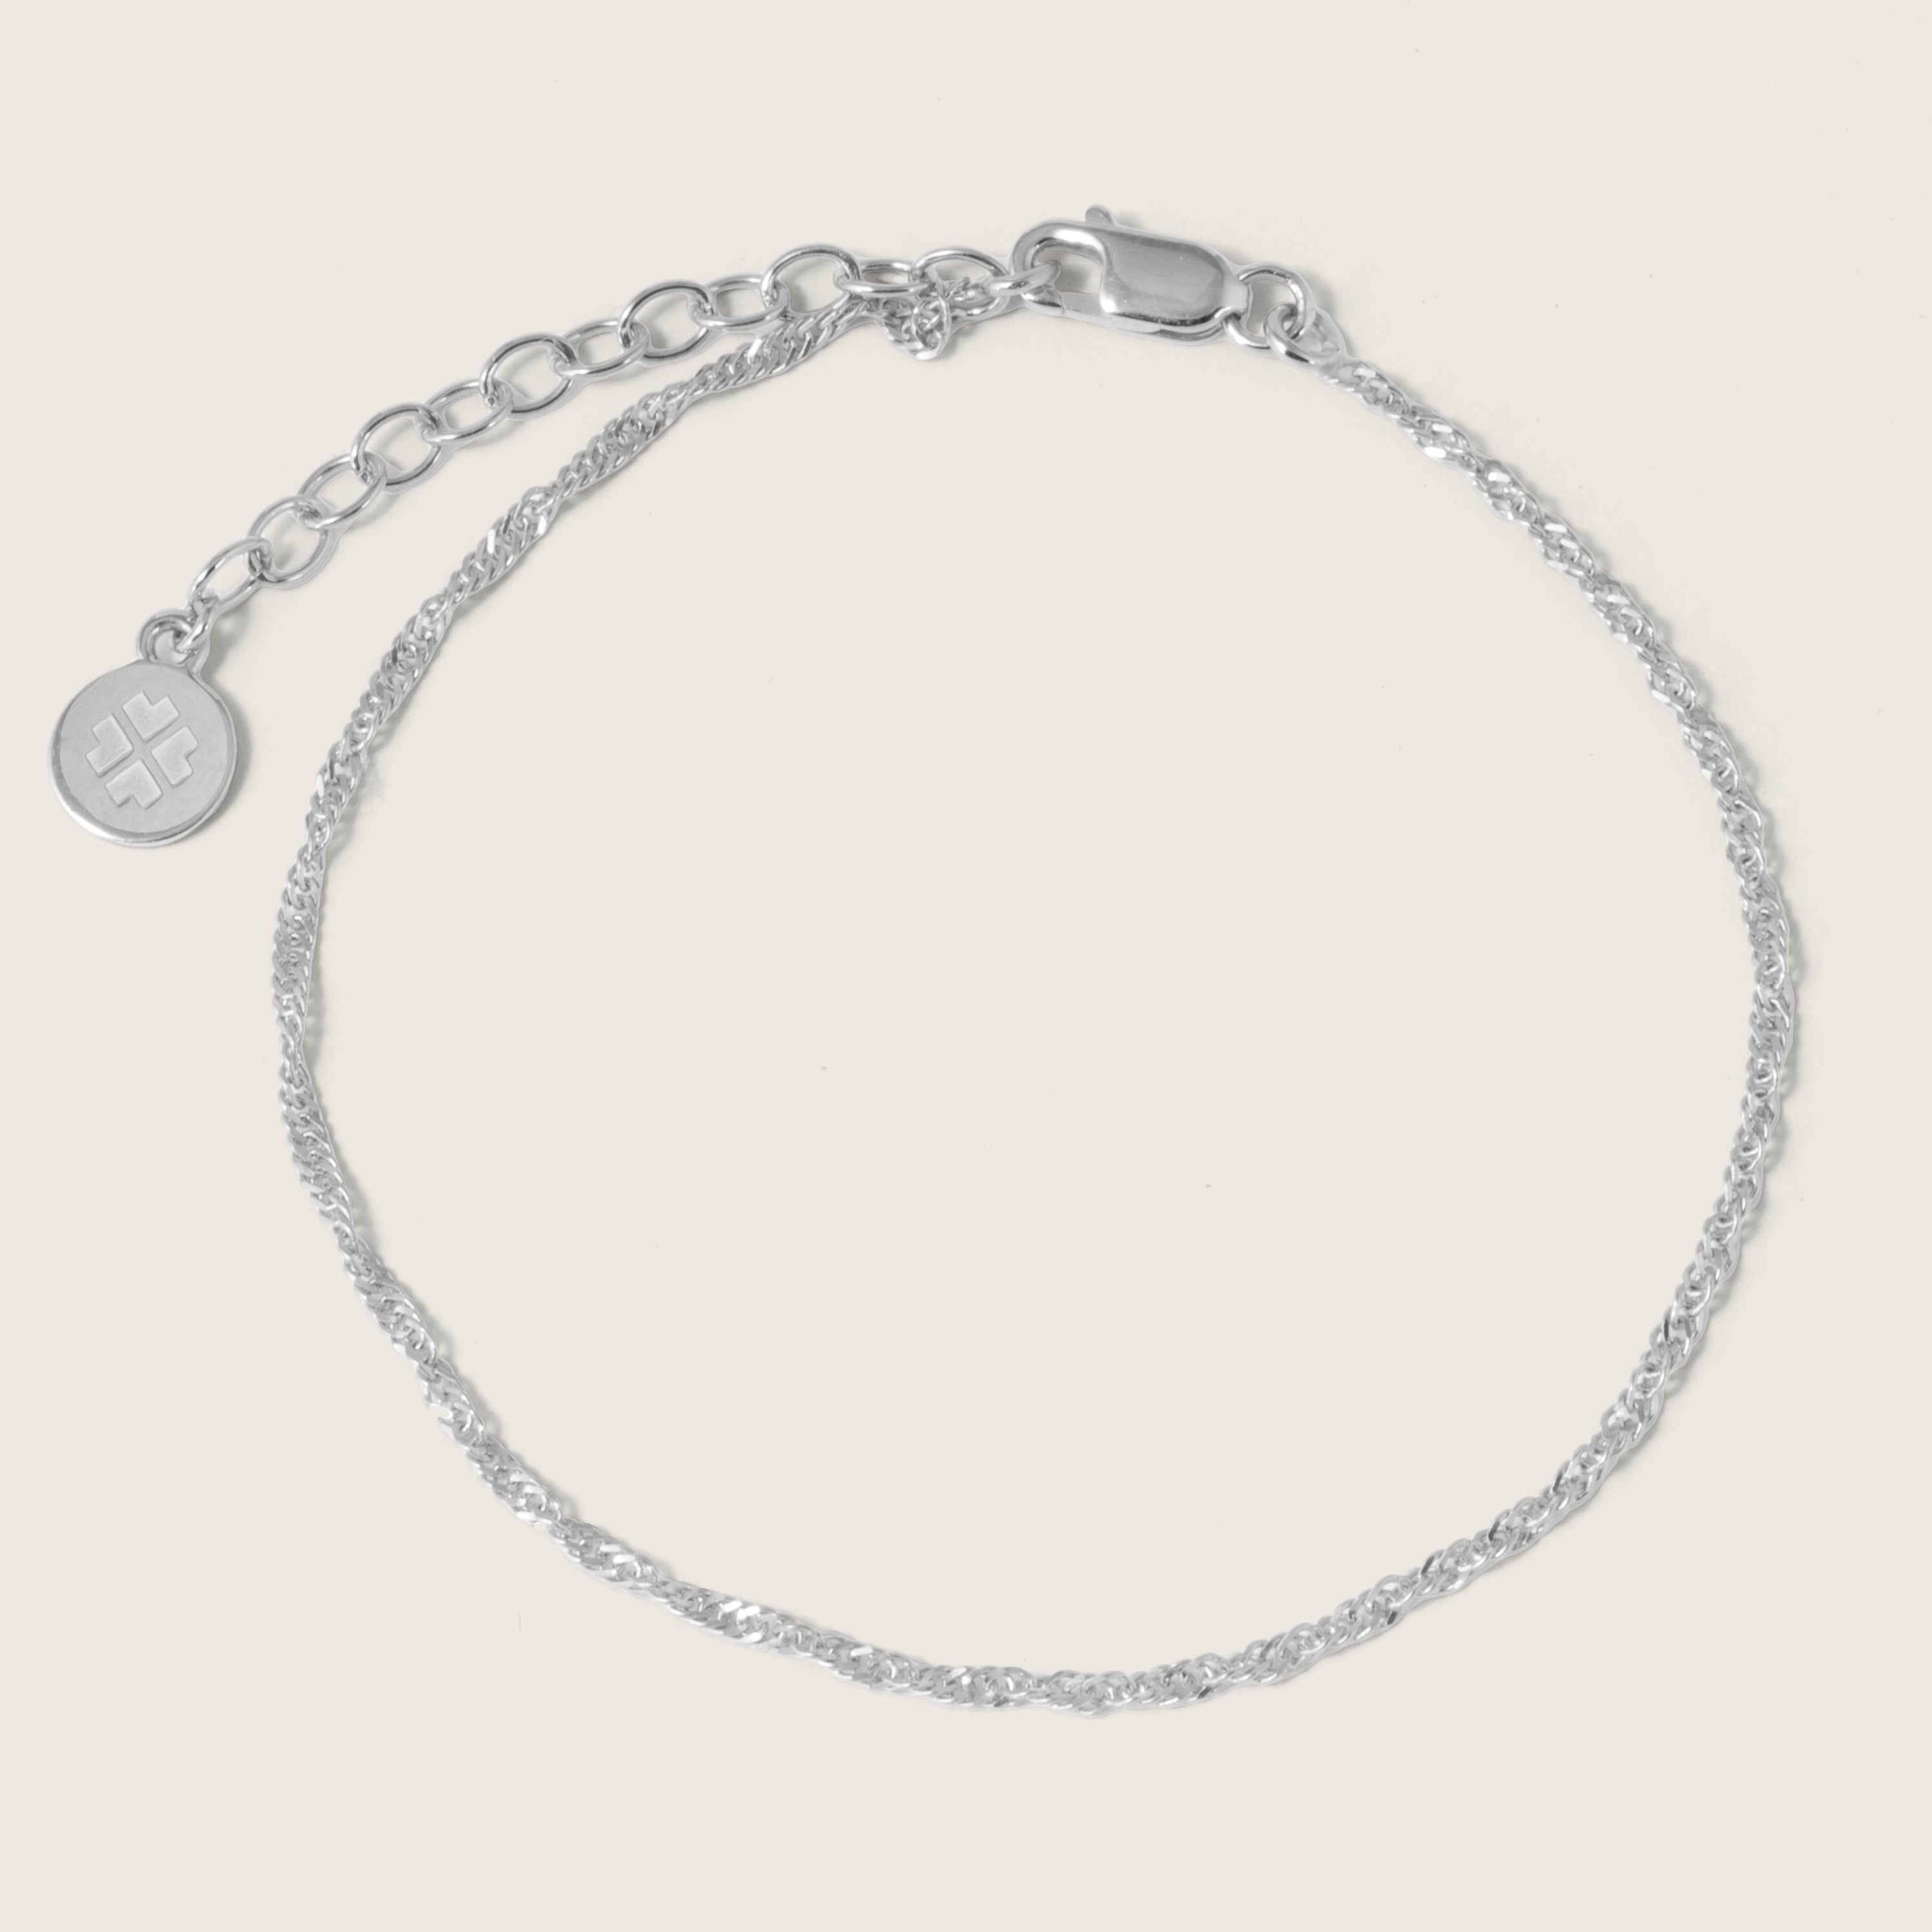 Silver Singapore Chain Bracelet